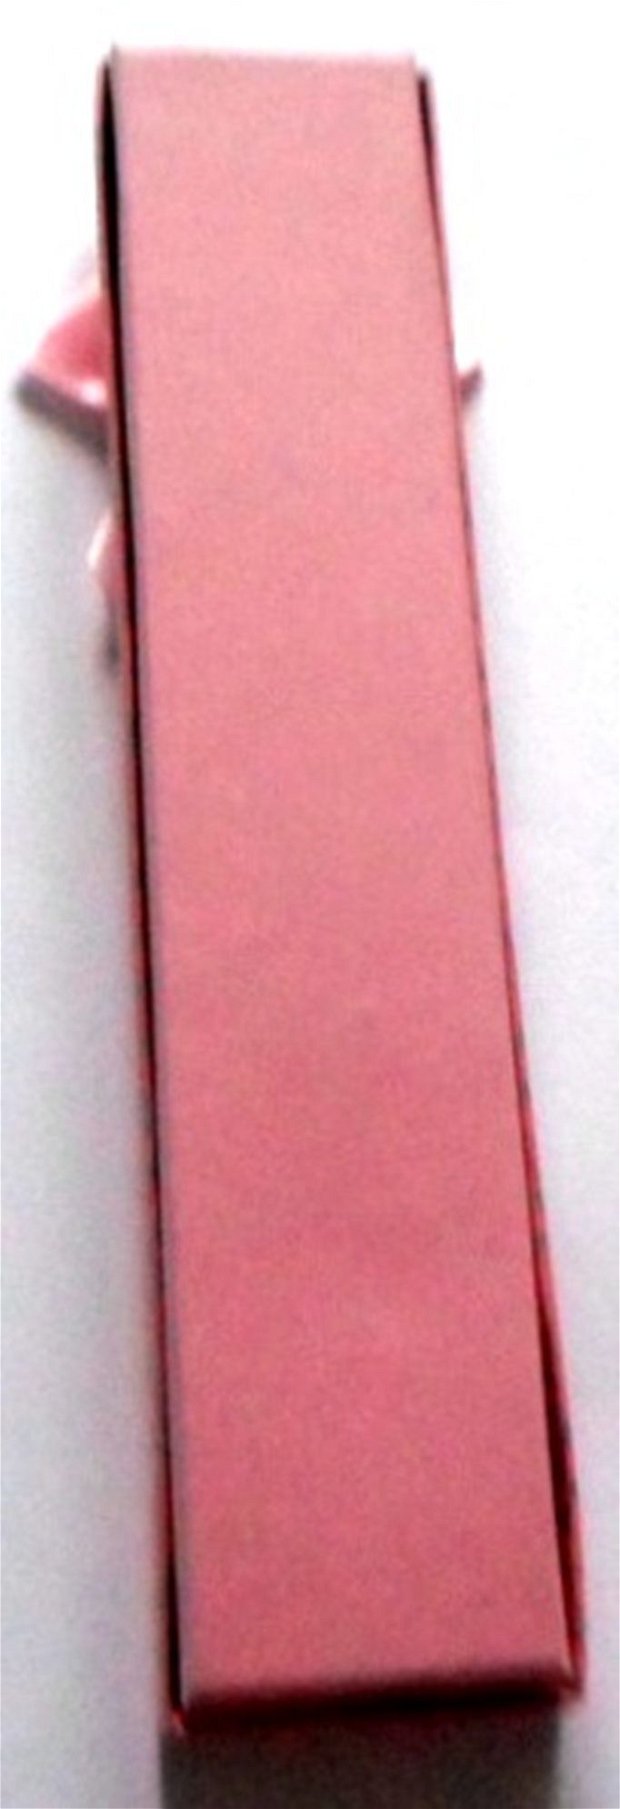 Cutie de carton roz cu model inimii argintiu si fundita roz